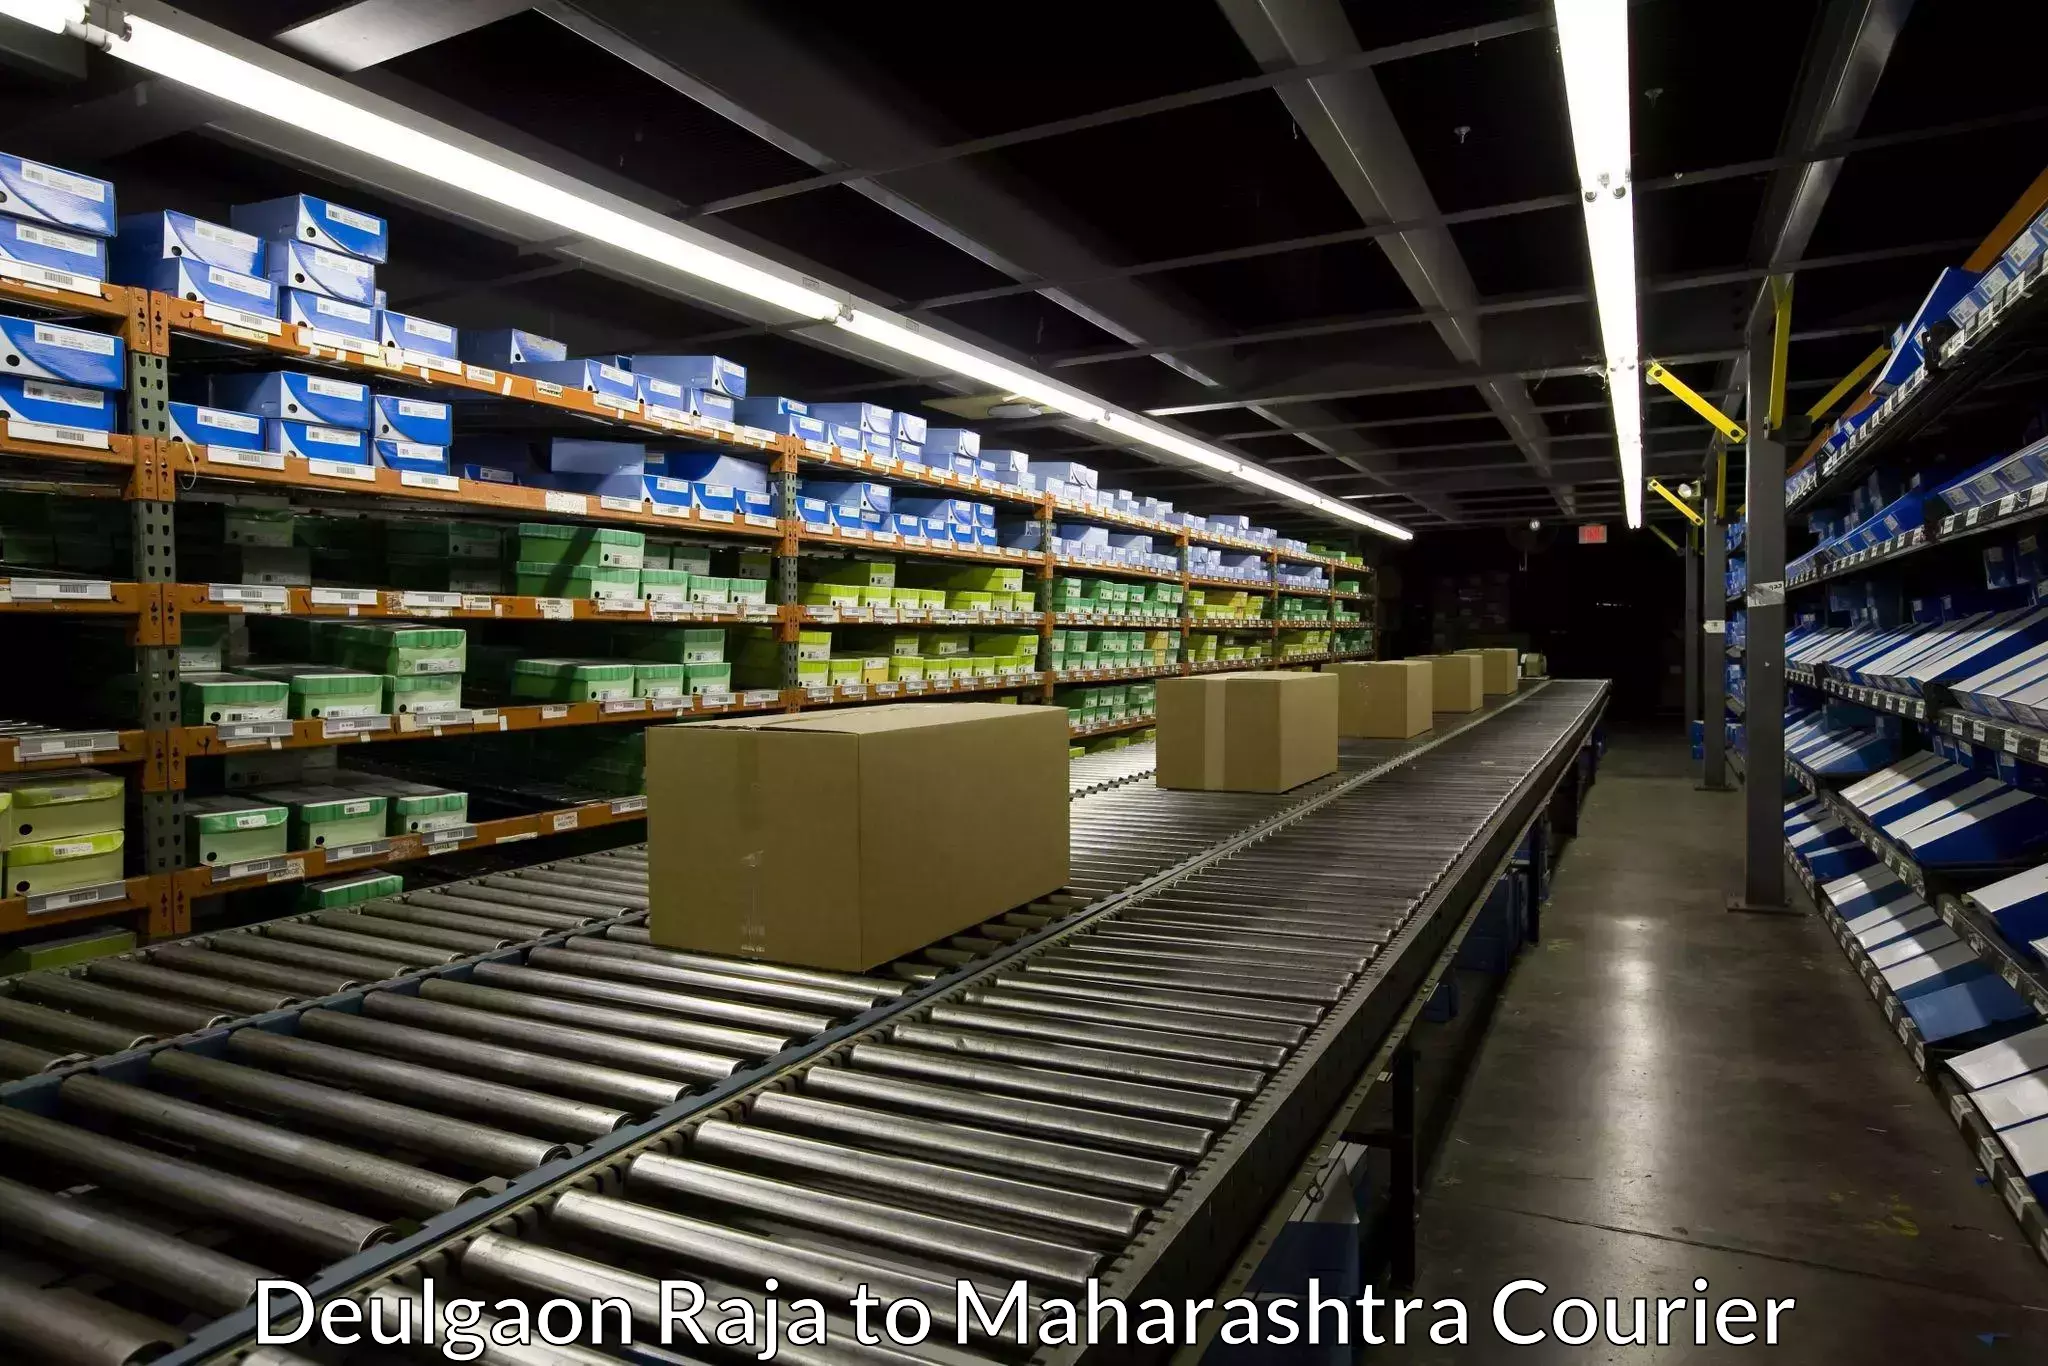 Express logistics providers Deulgaon Raja to Maharashtra